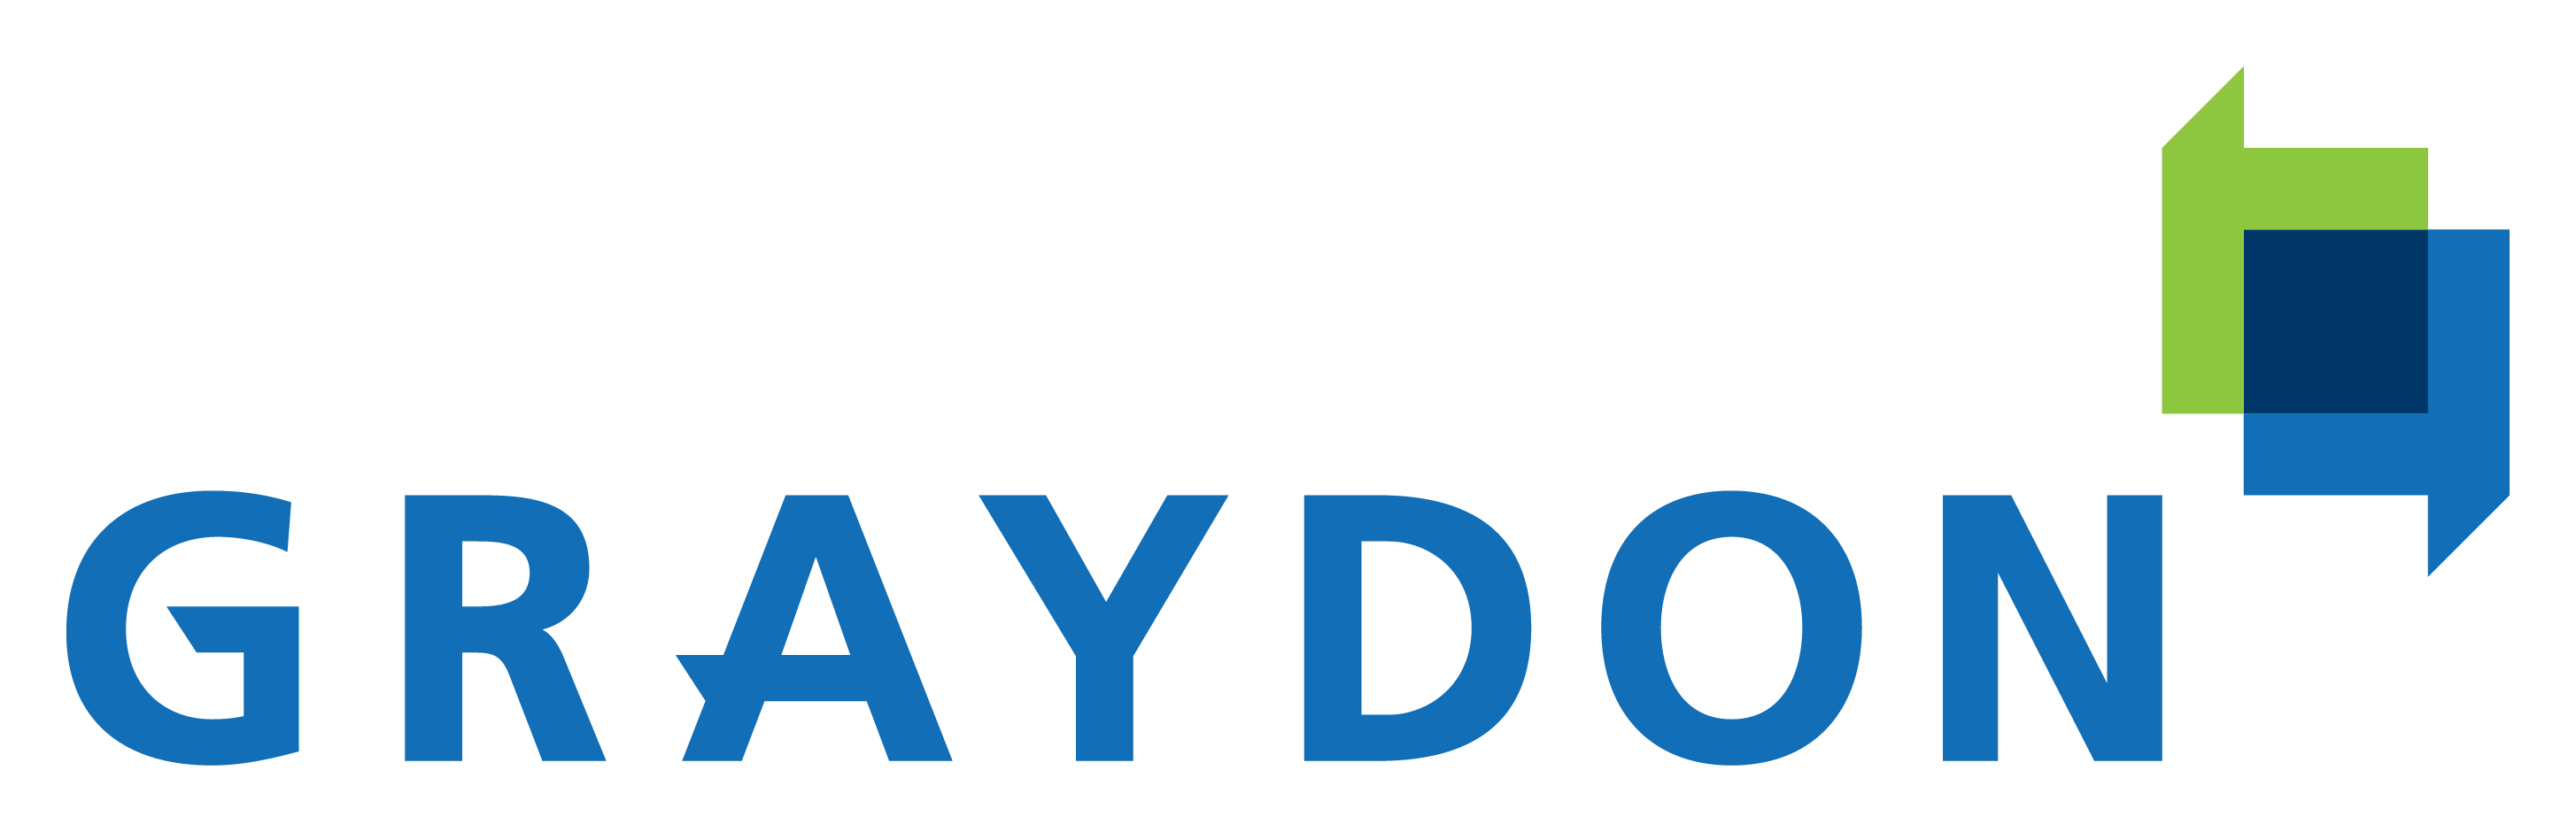 Graydon_Logo_PMS